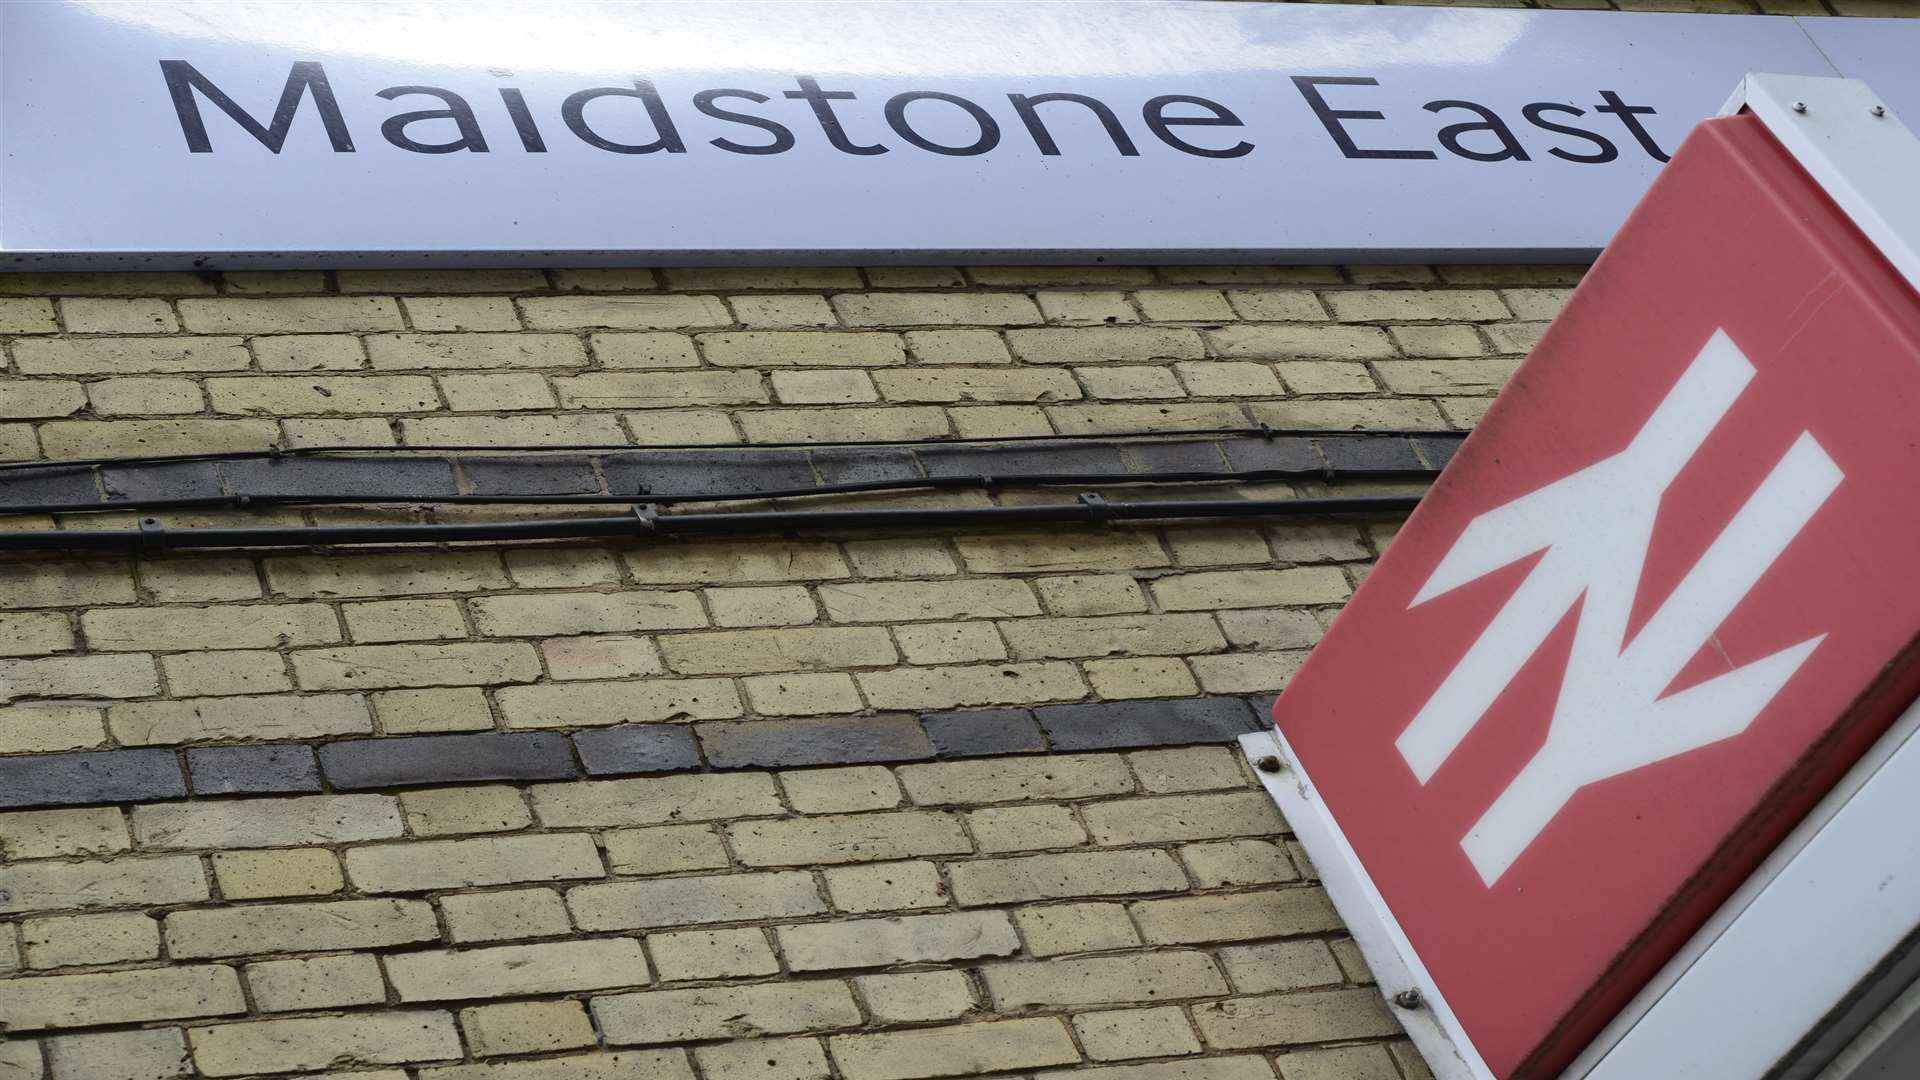 Maidstone East